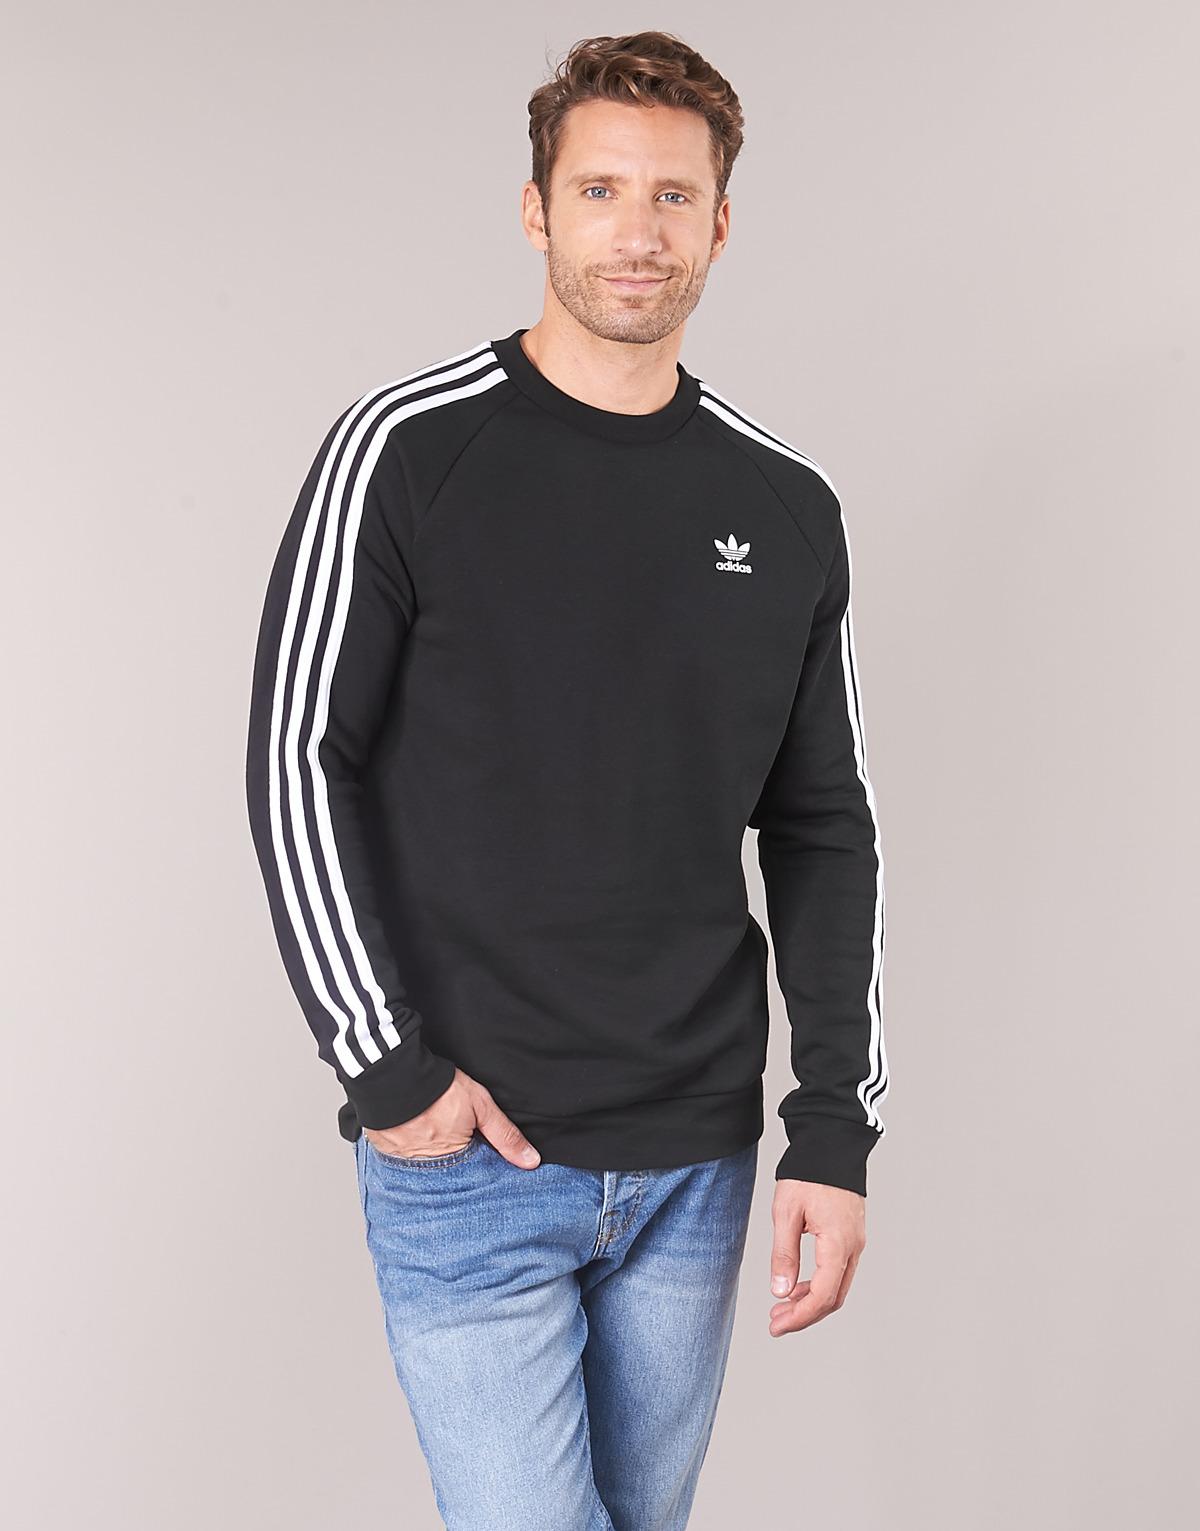 adidas 3 Stripes Crew Sweatshirt in Black for Men - Save 40% - Lyst